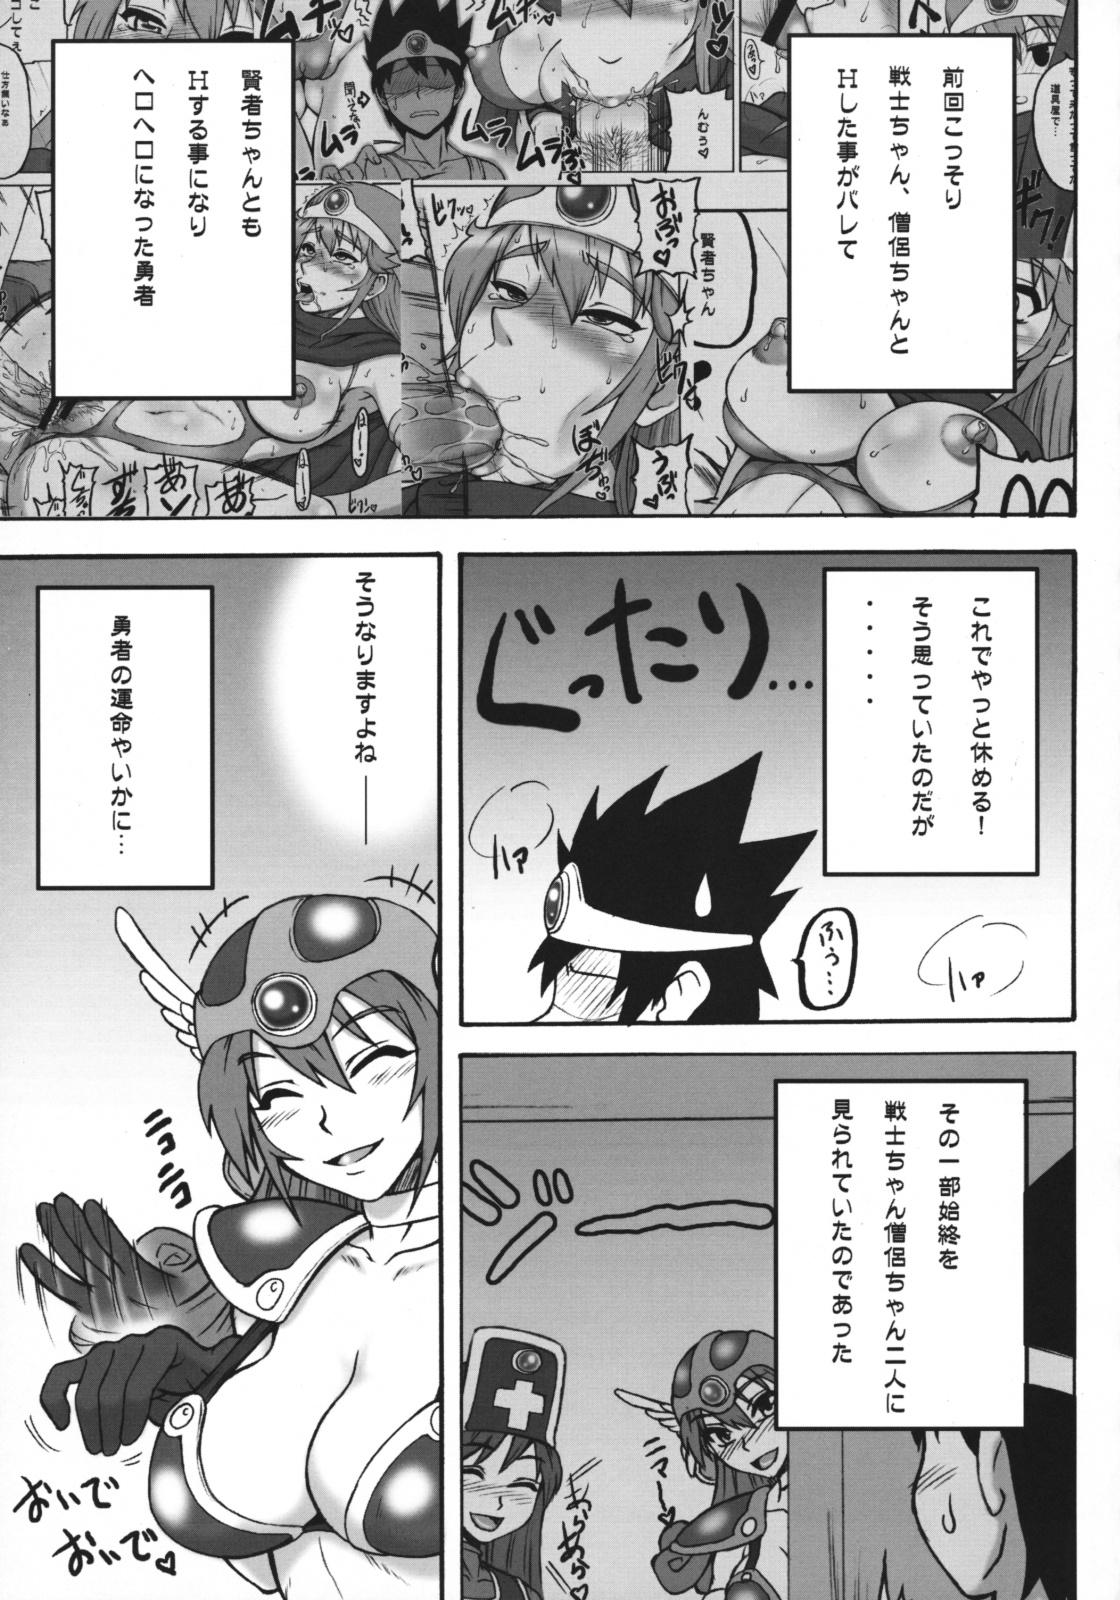 Masturbating Touko IV - Dragon quest iii With - Page 4